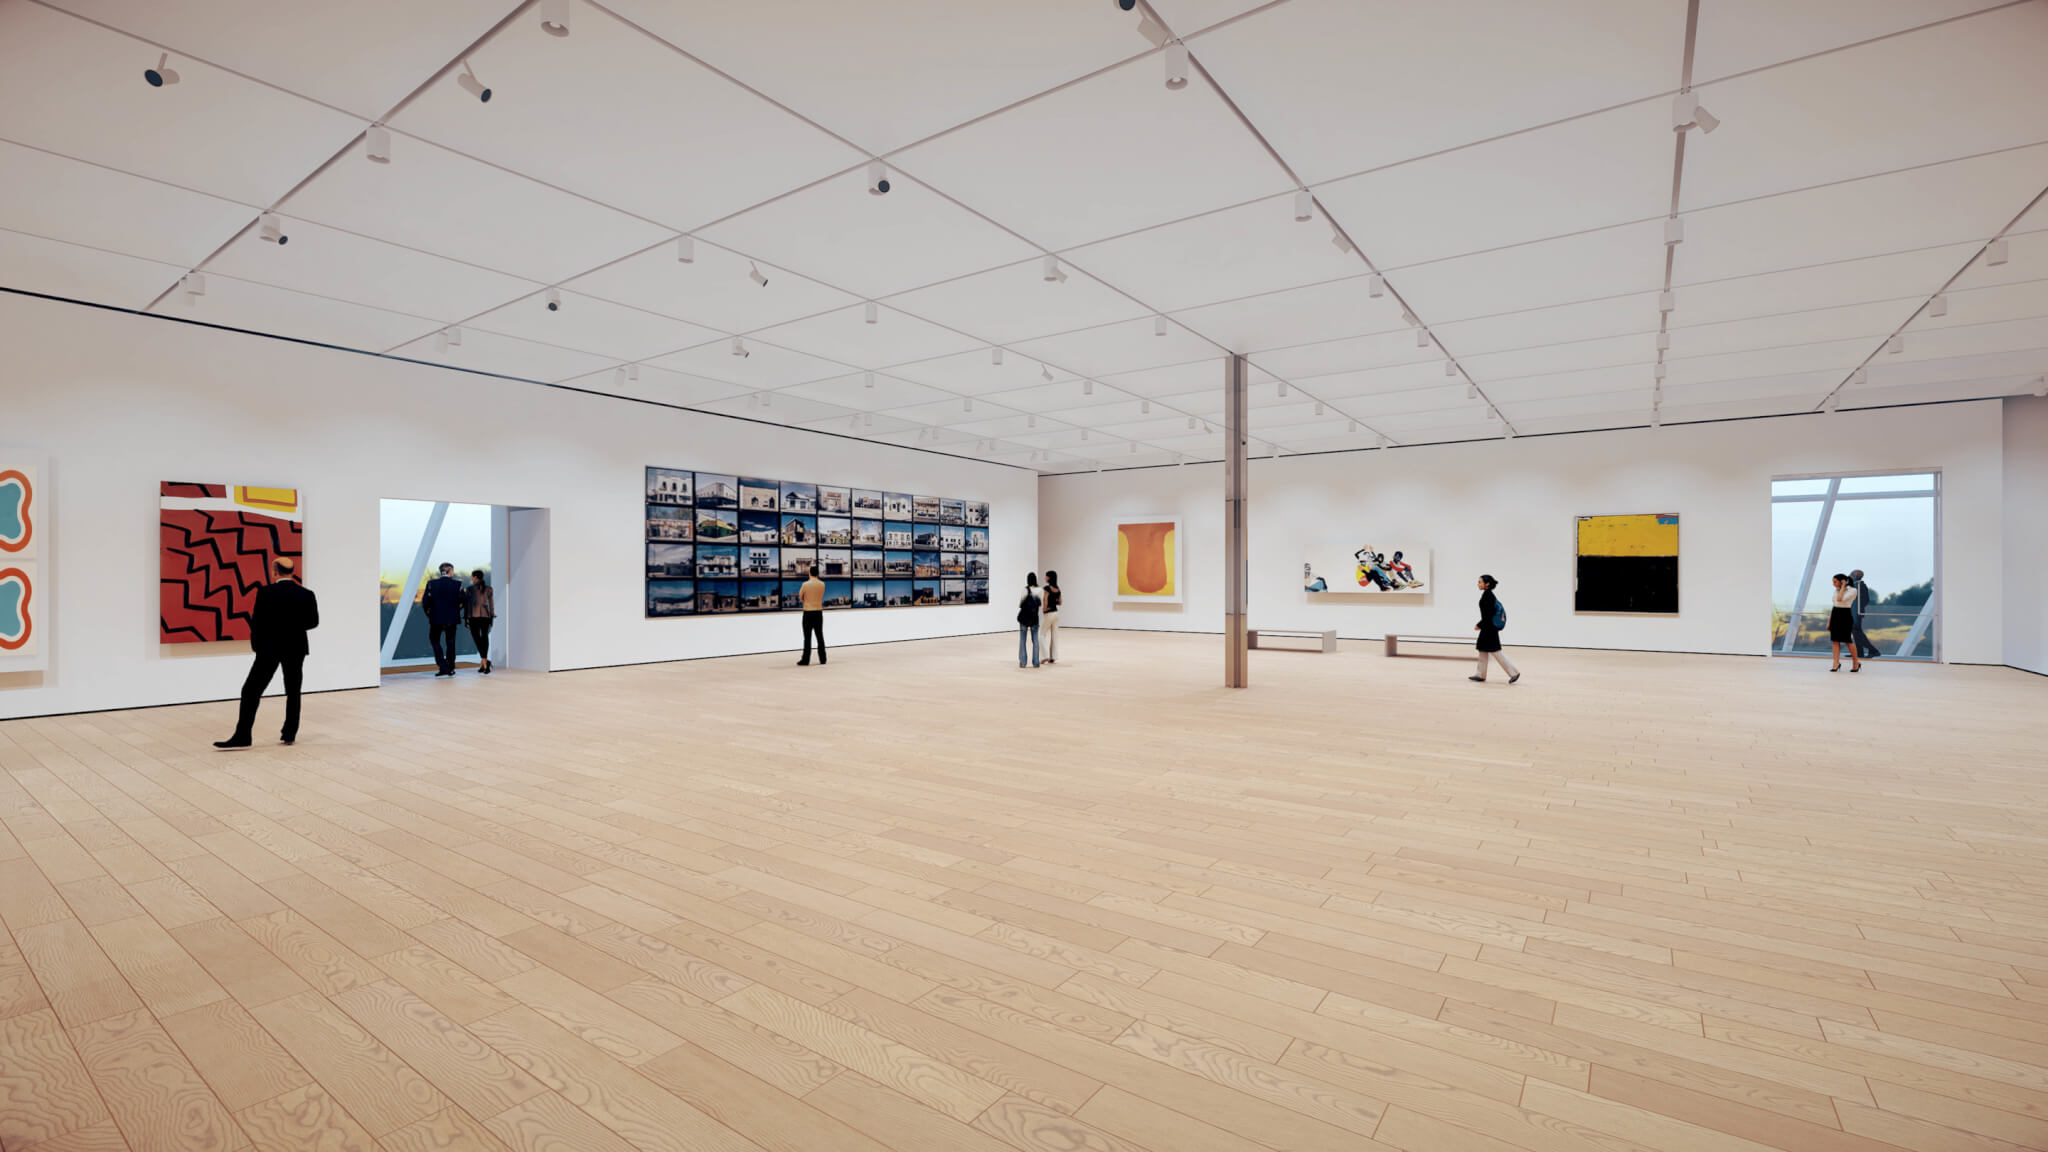 rendering of an interior art museum gallery